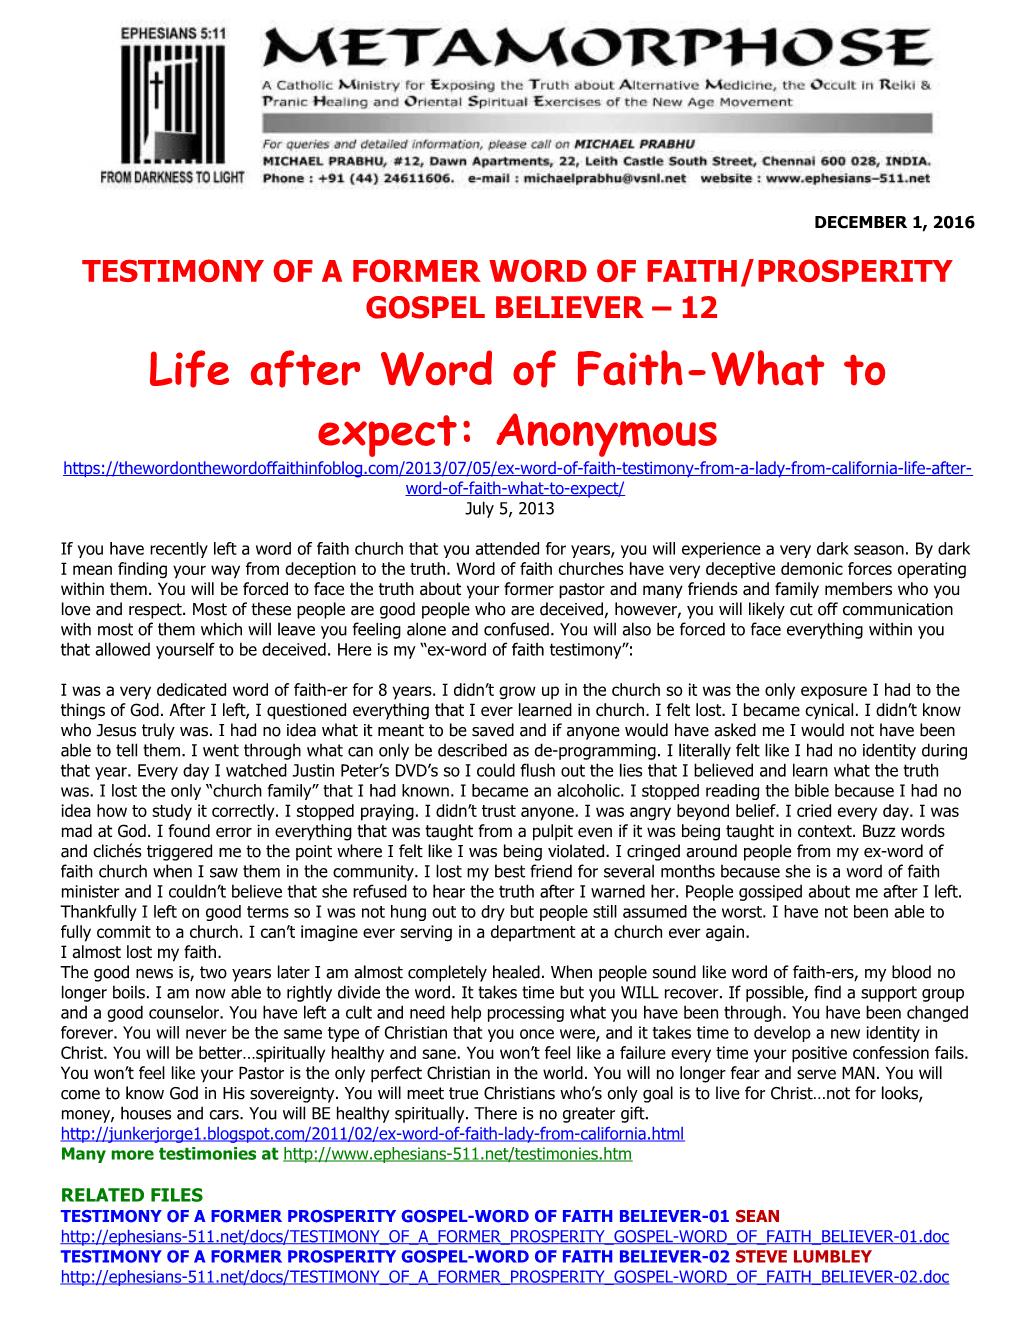 Testimony of a Former Word of Faith/Prosperity Gospel Believer 12